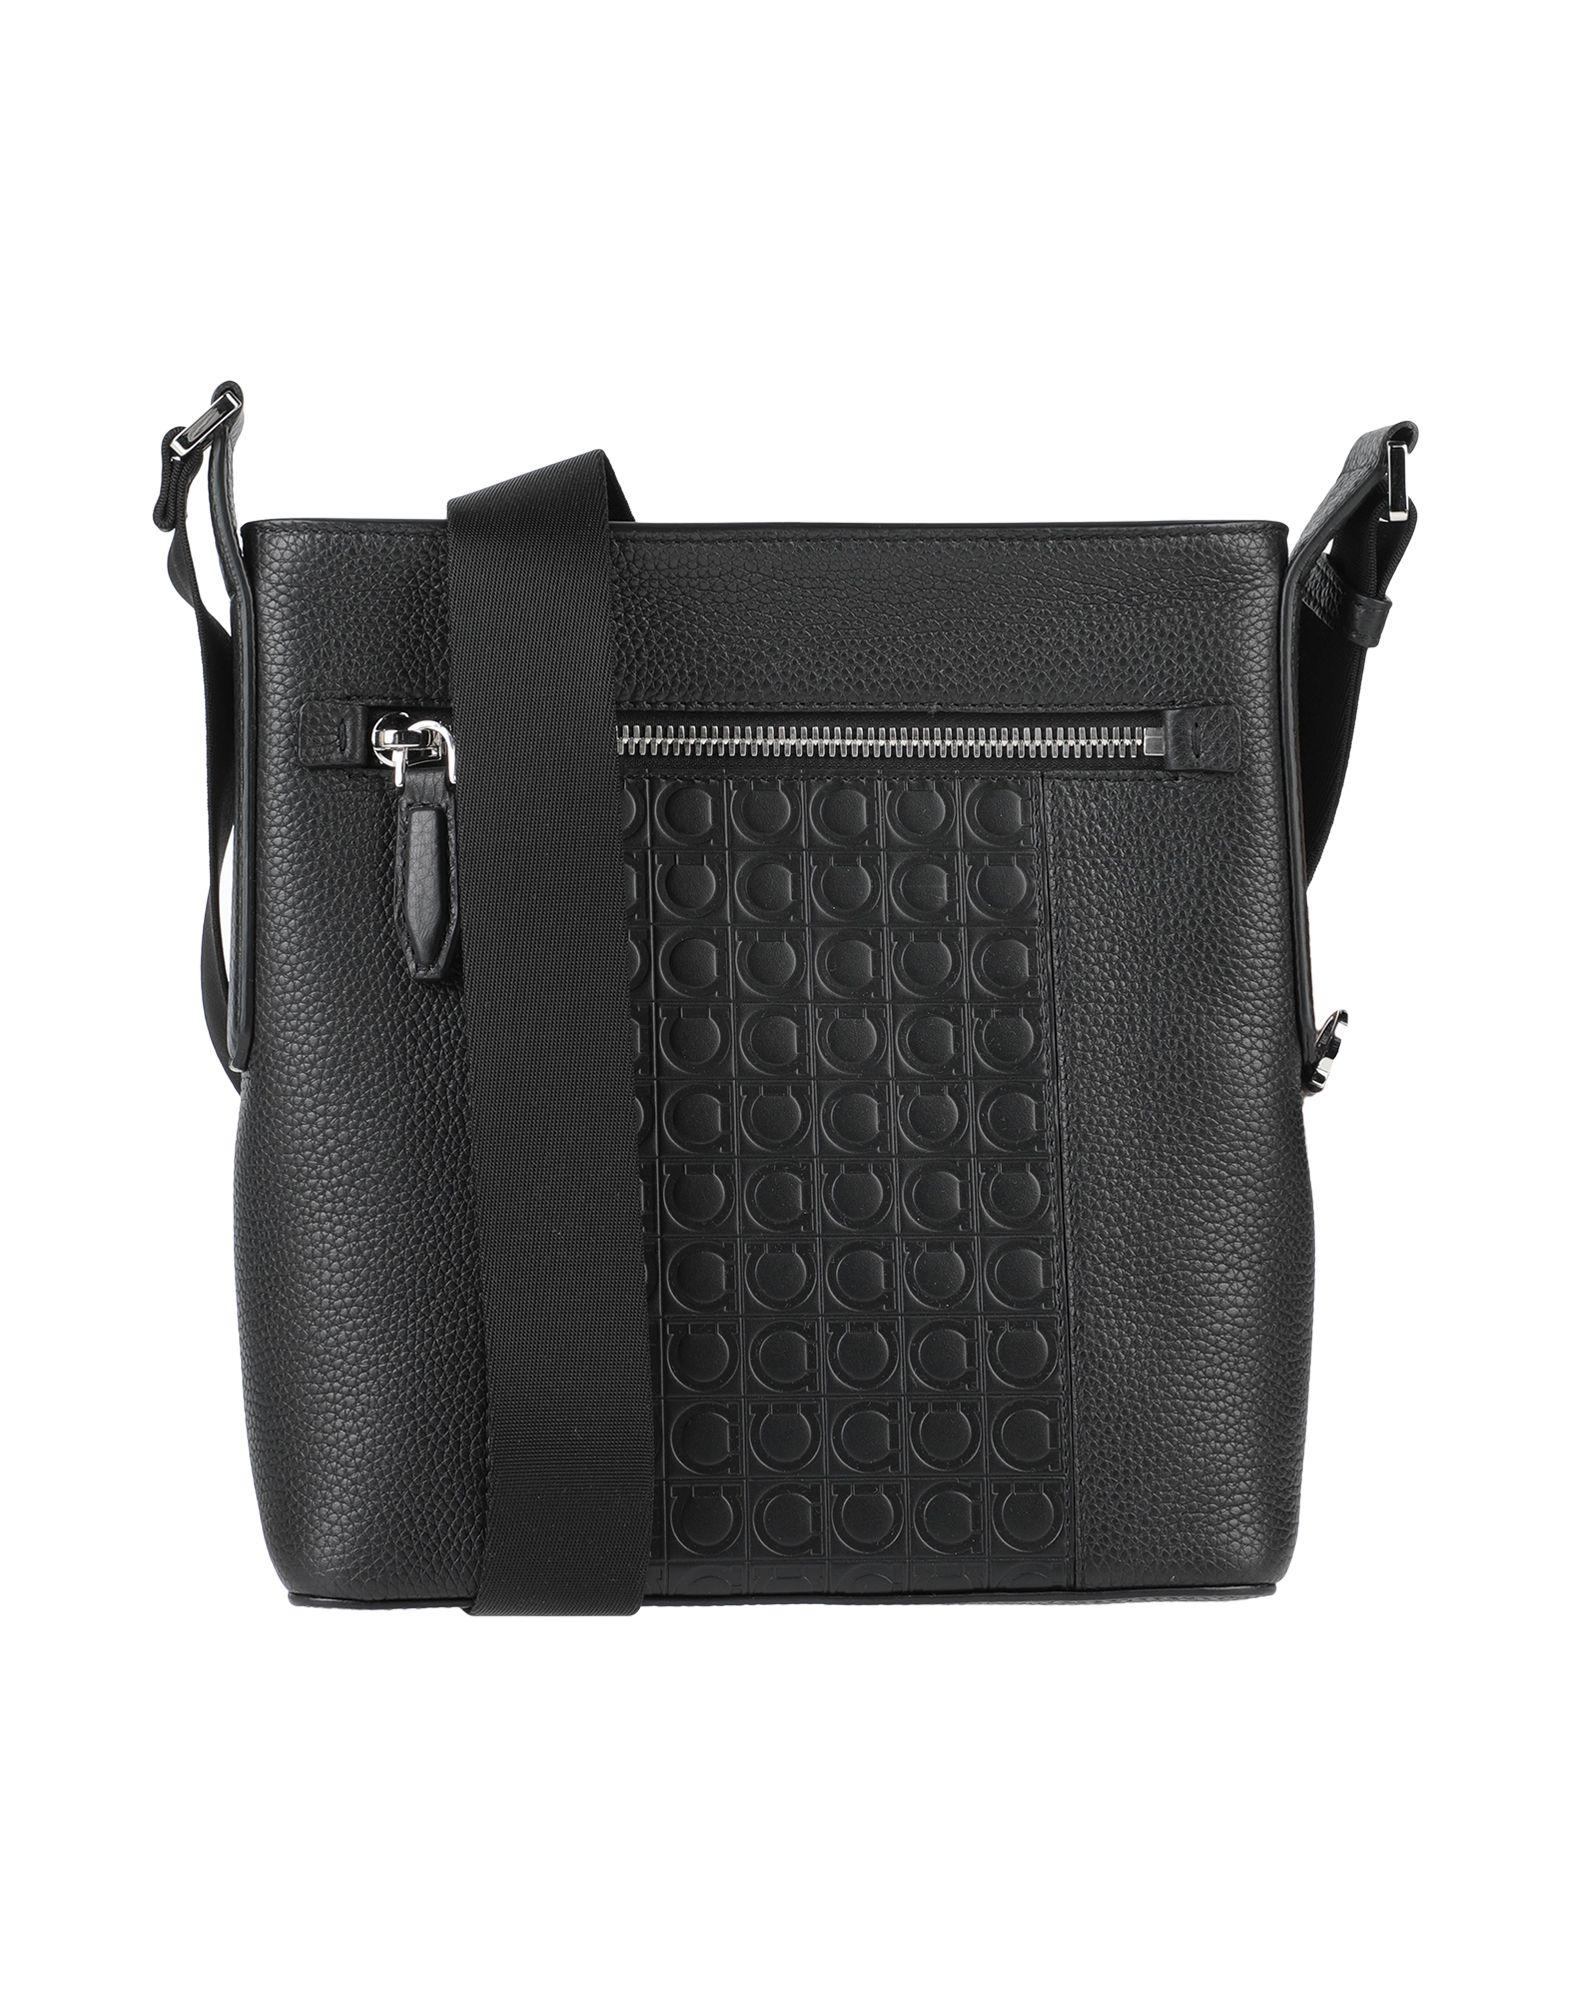 Ferragamo Leather Cross-body Bag in Black for Men - Lyst